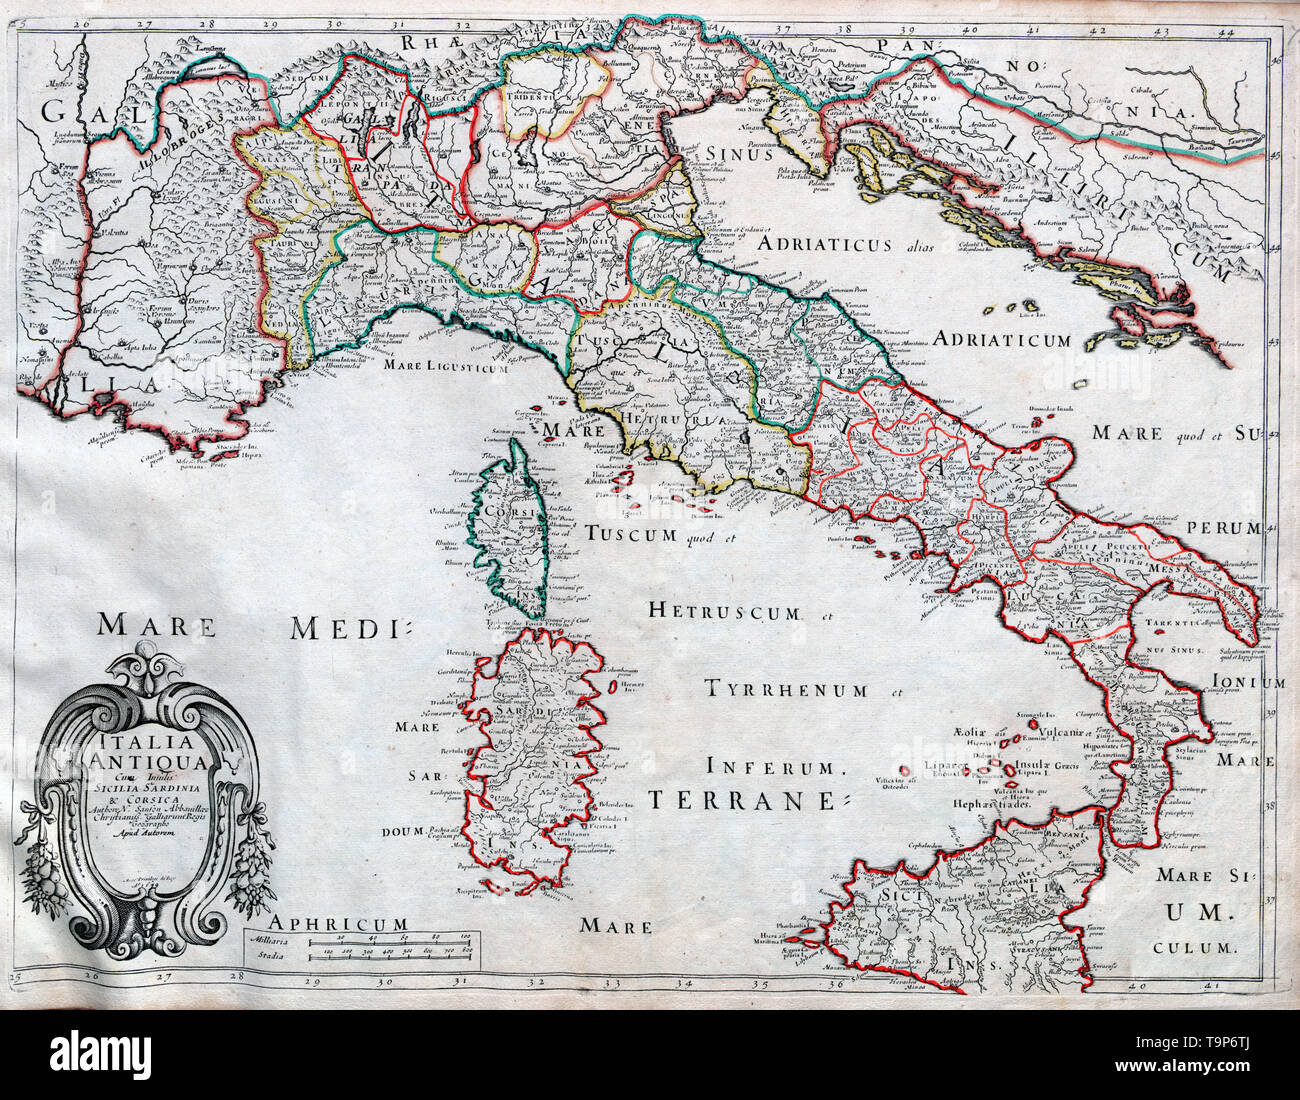 Karte von Italia Antiqua - Sanson Atlas, um 1700 Stockfoto